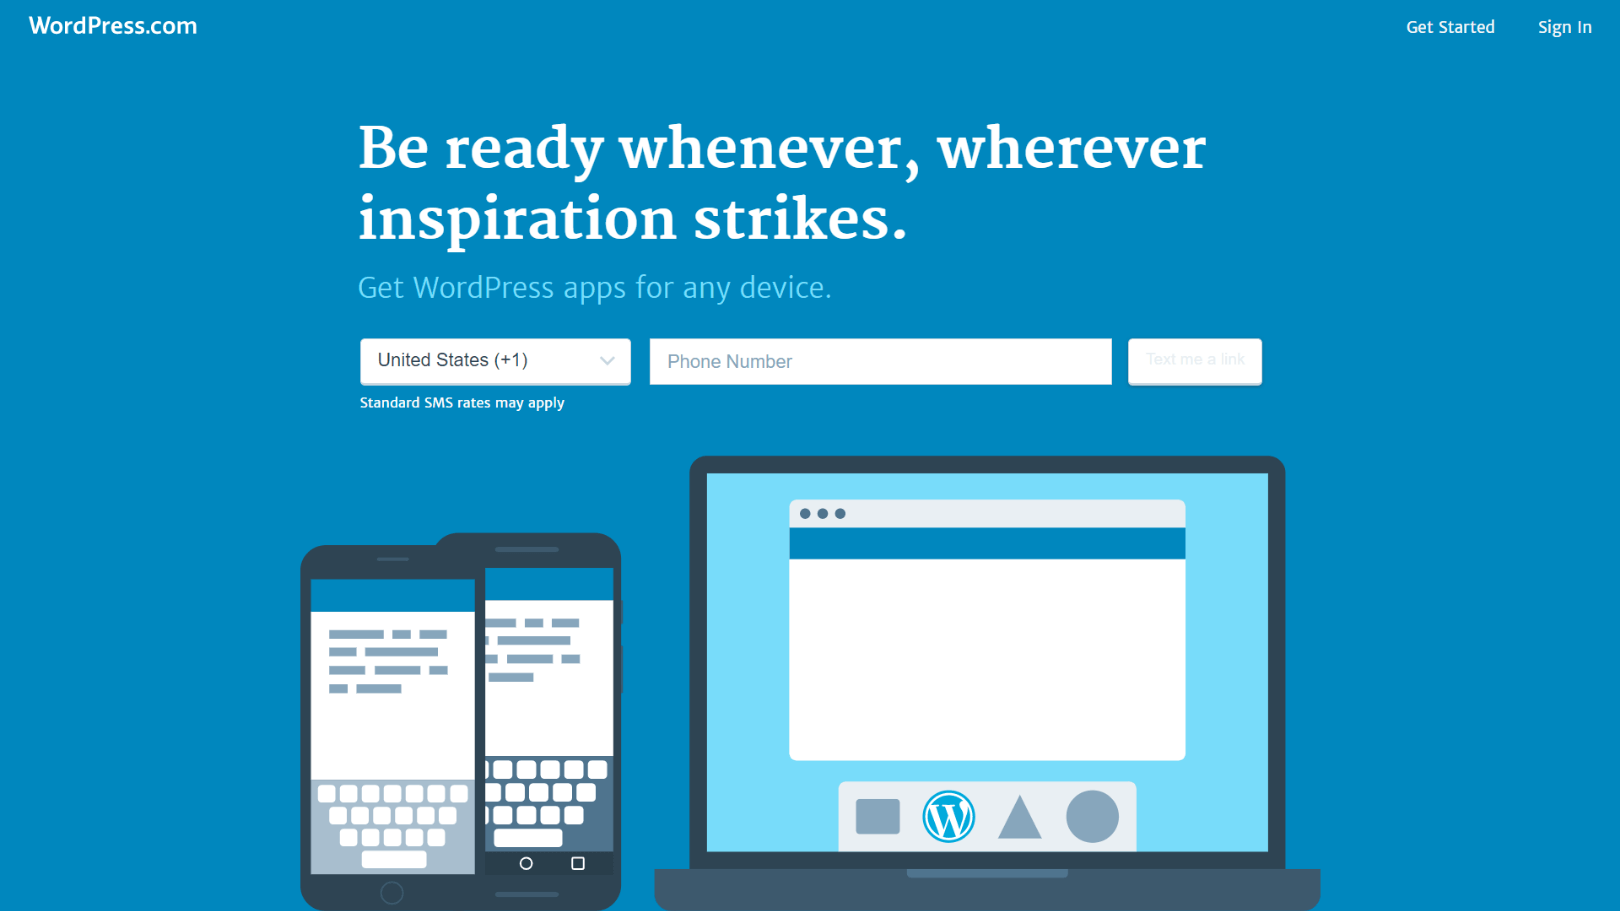 WordPress com Log-in Be ready whenever wherever